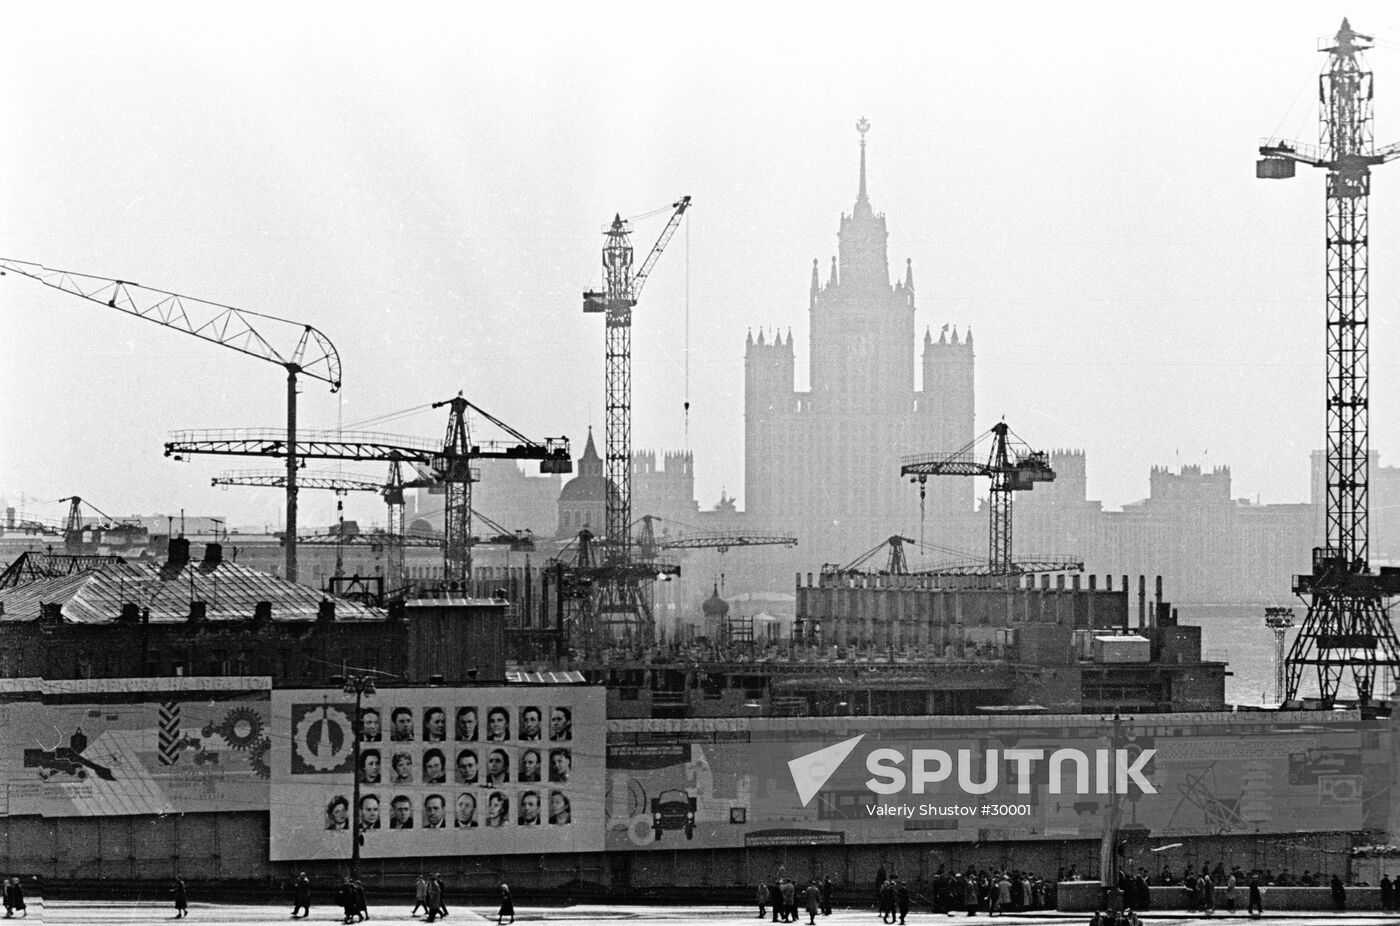 MOSCOW CONSTRUCTION SITE MULTI-STOREY BUILDING CRANES